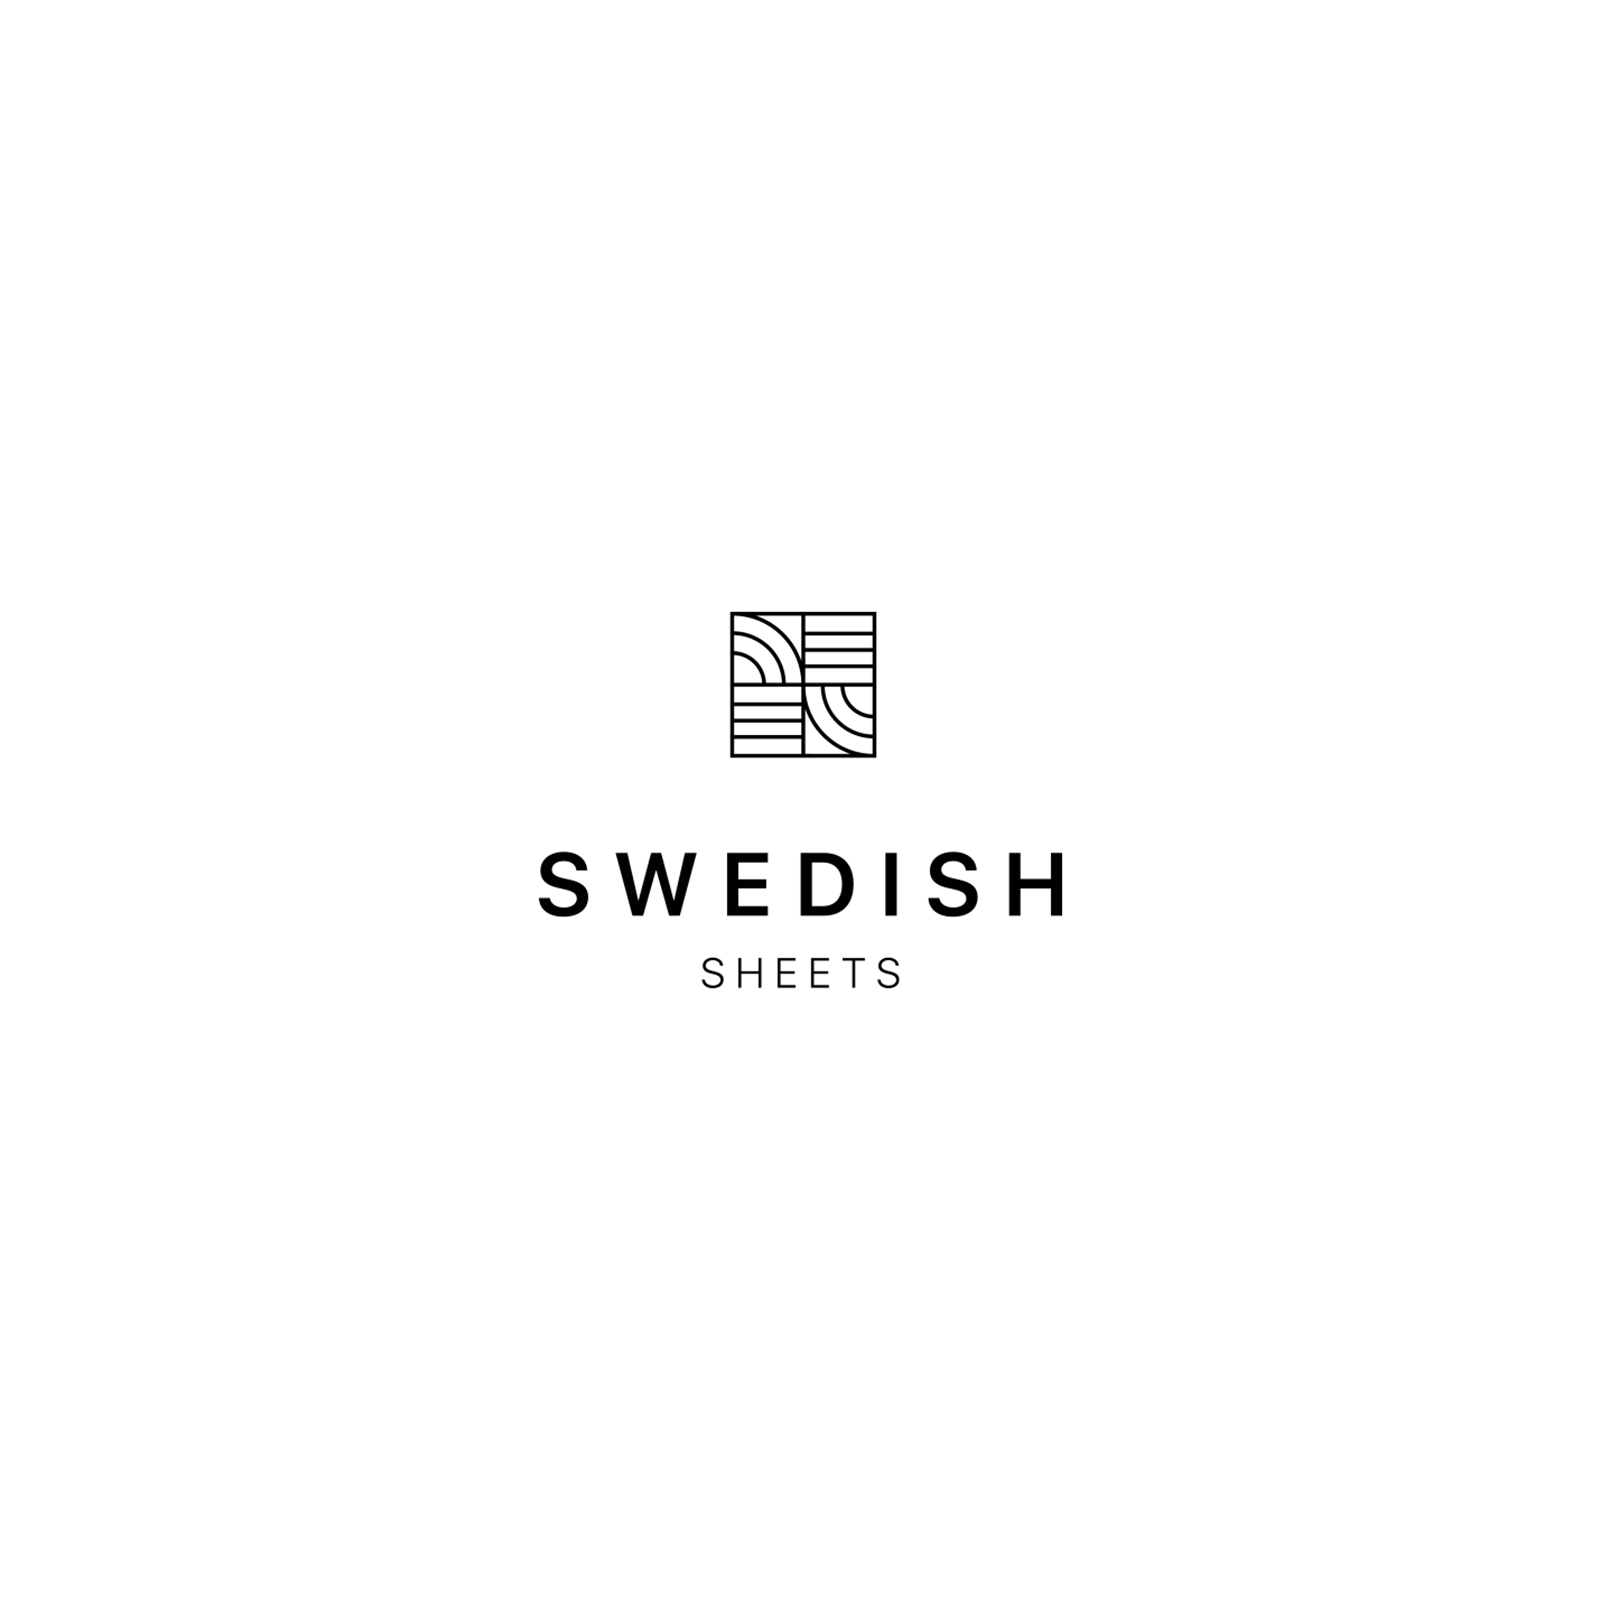 Swedish Logo - Image result for swedish logo design | Branding, Logos, and Signs